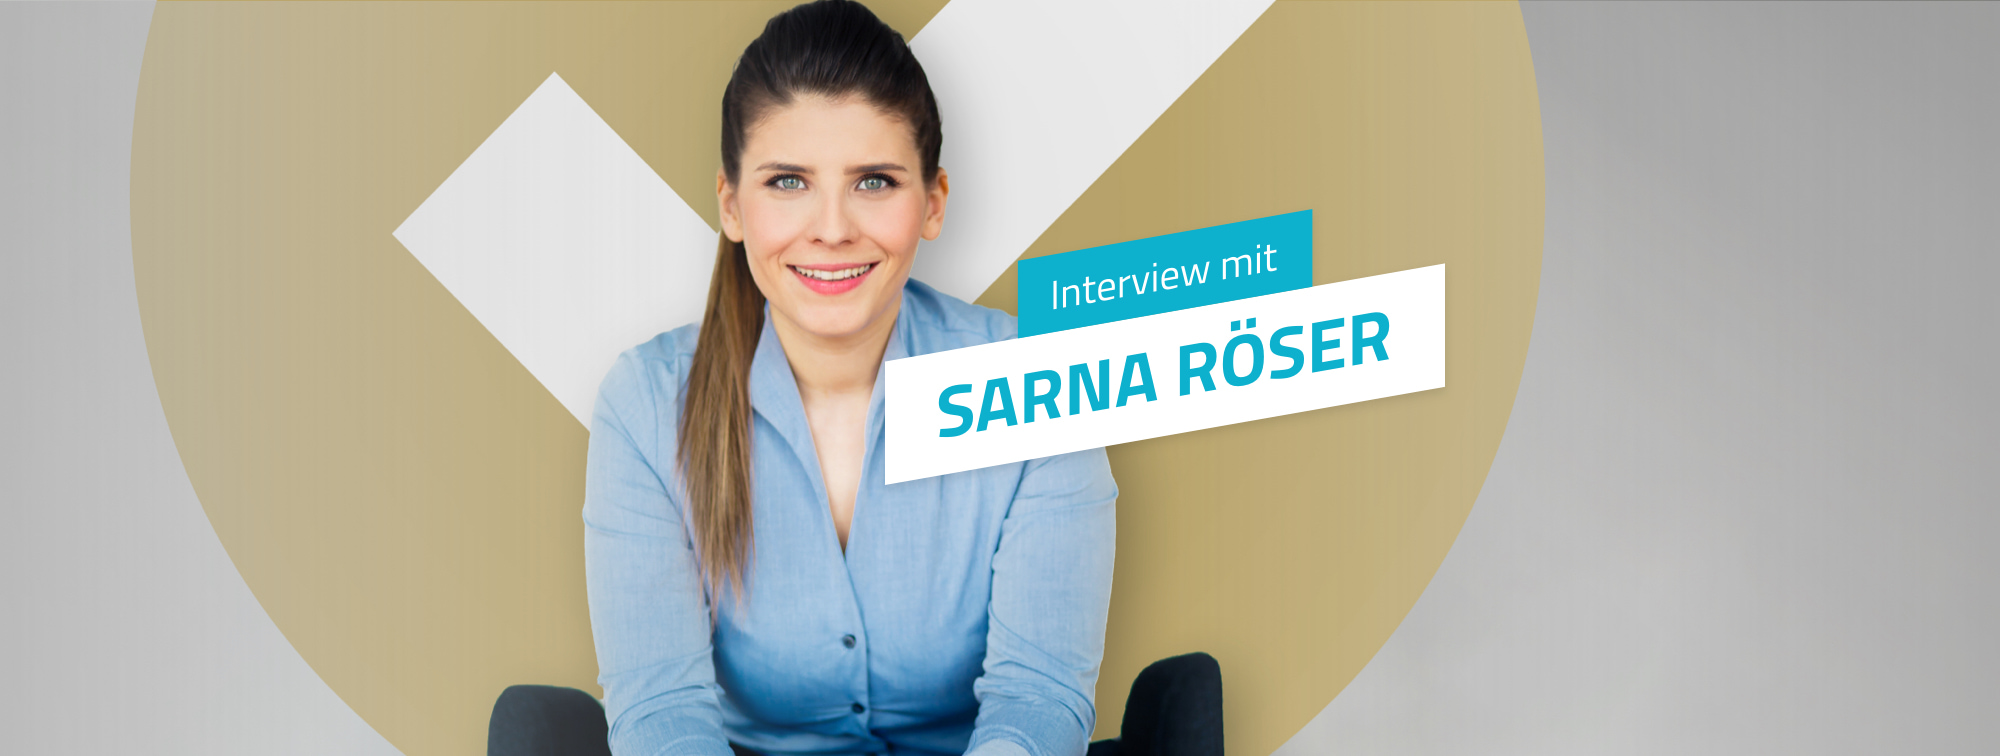 Sarna-Roeser-Interview-ProvenExpert